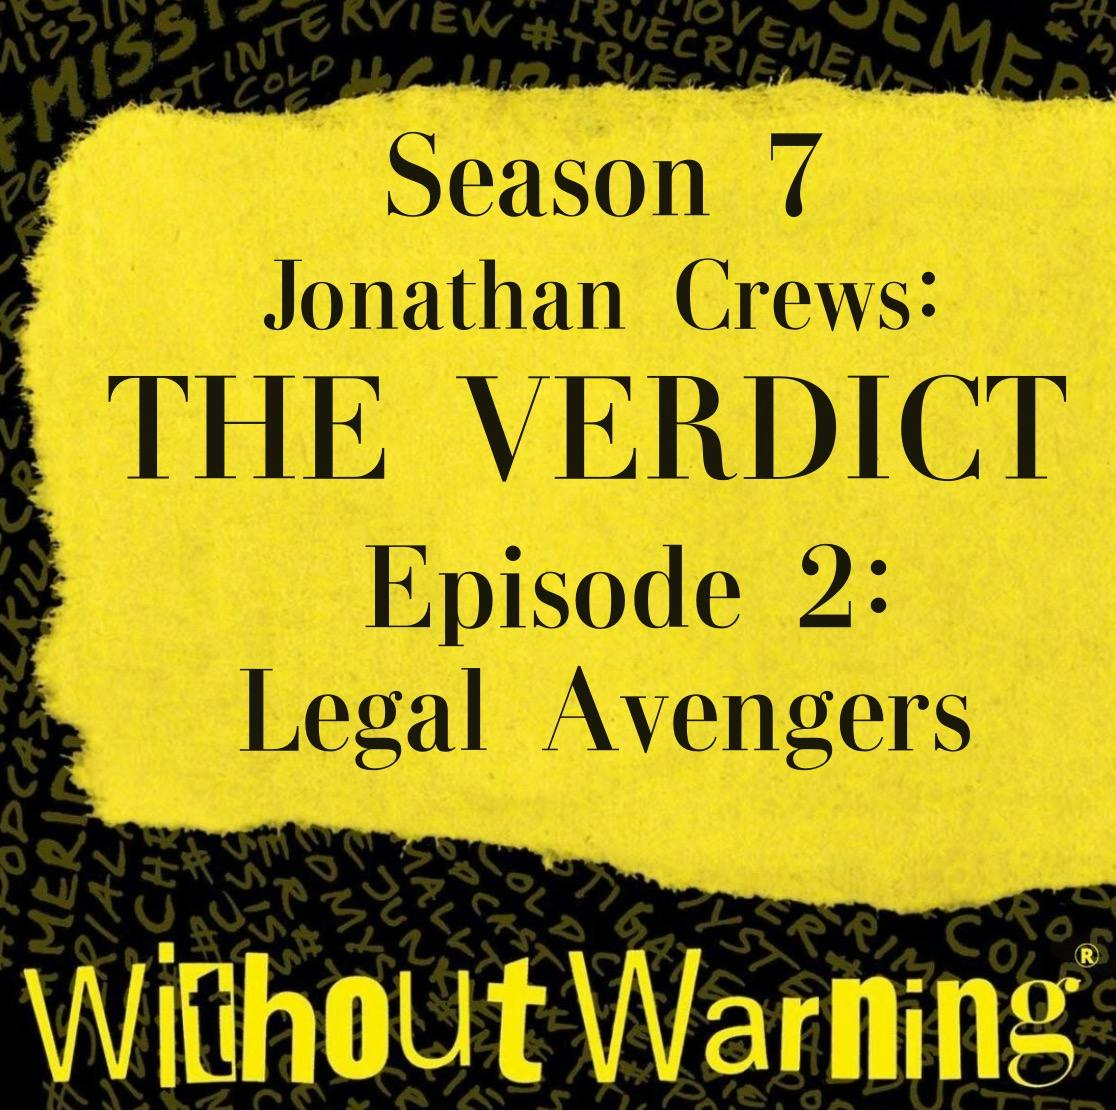 JONATHAN CREWS THE VERDICT: The Legal Avengers